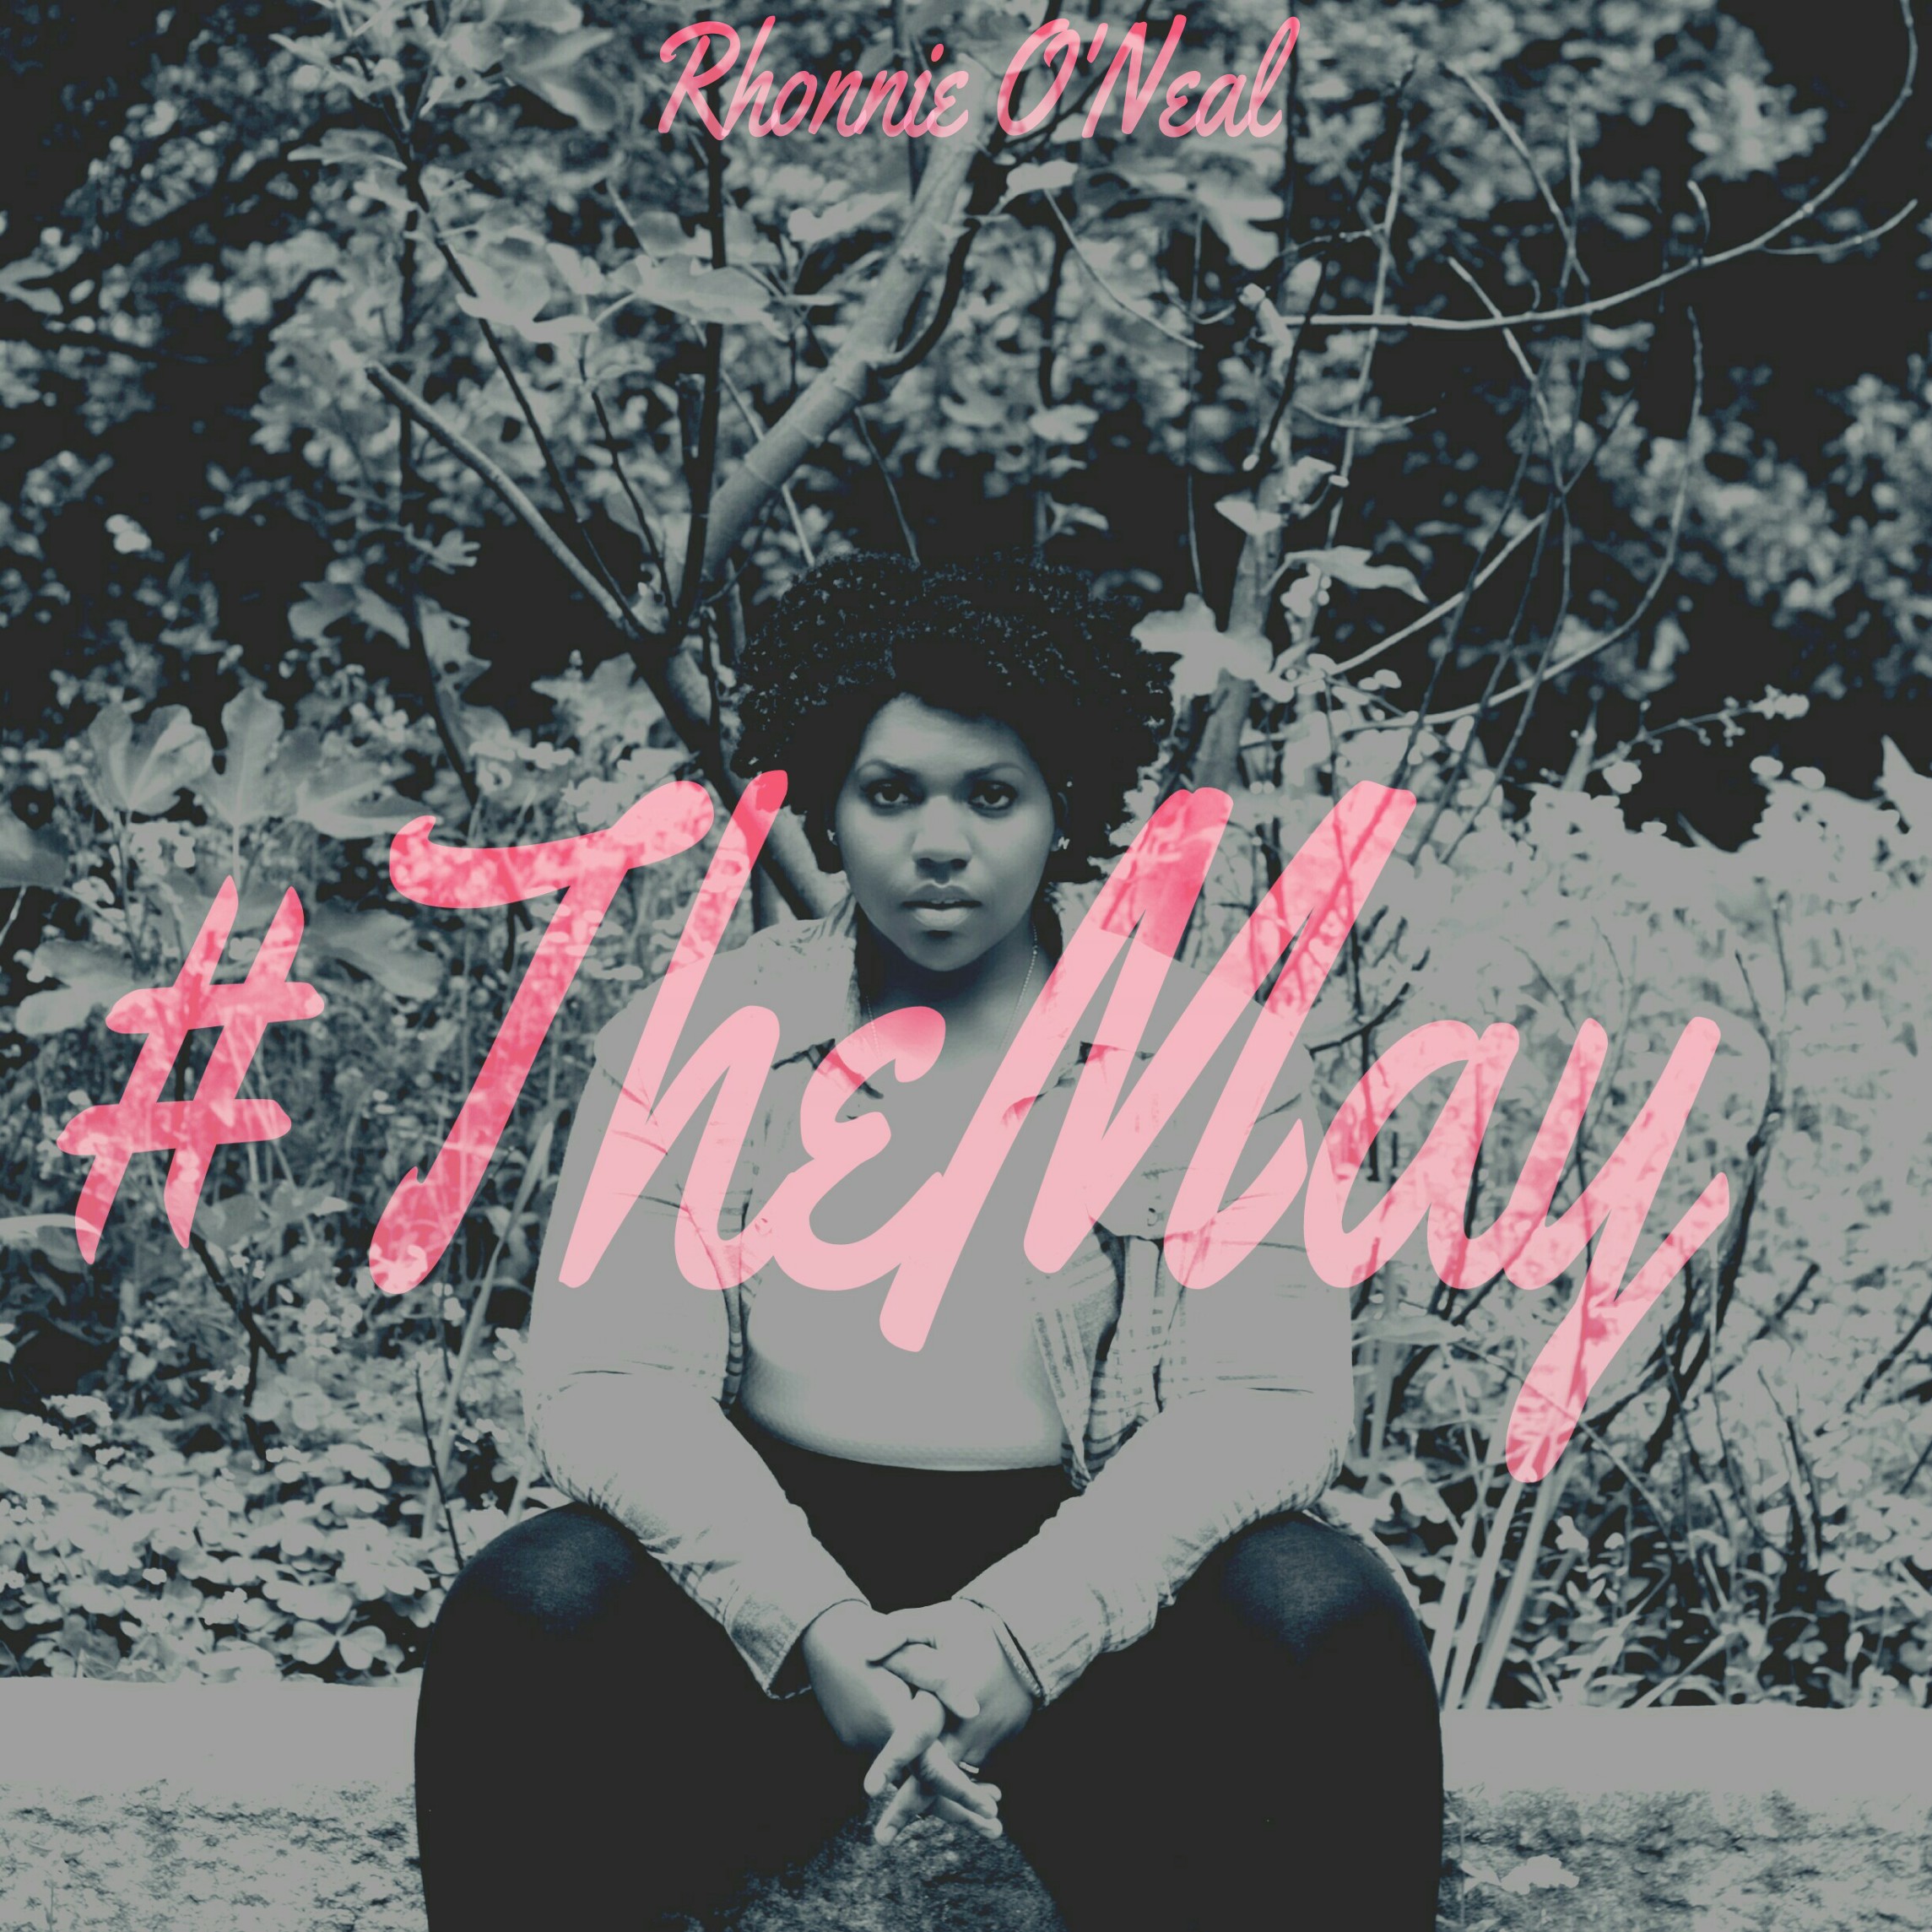 Rhonnie O’Neal: The May (EP)